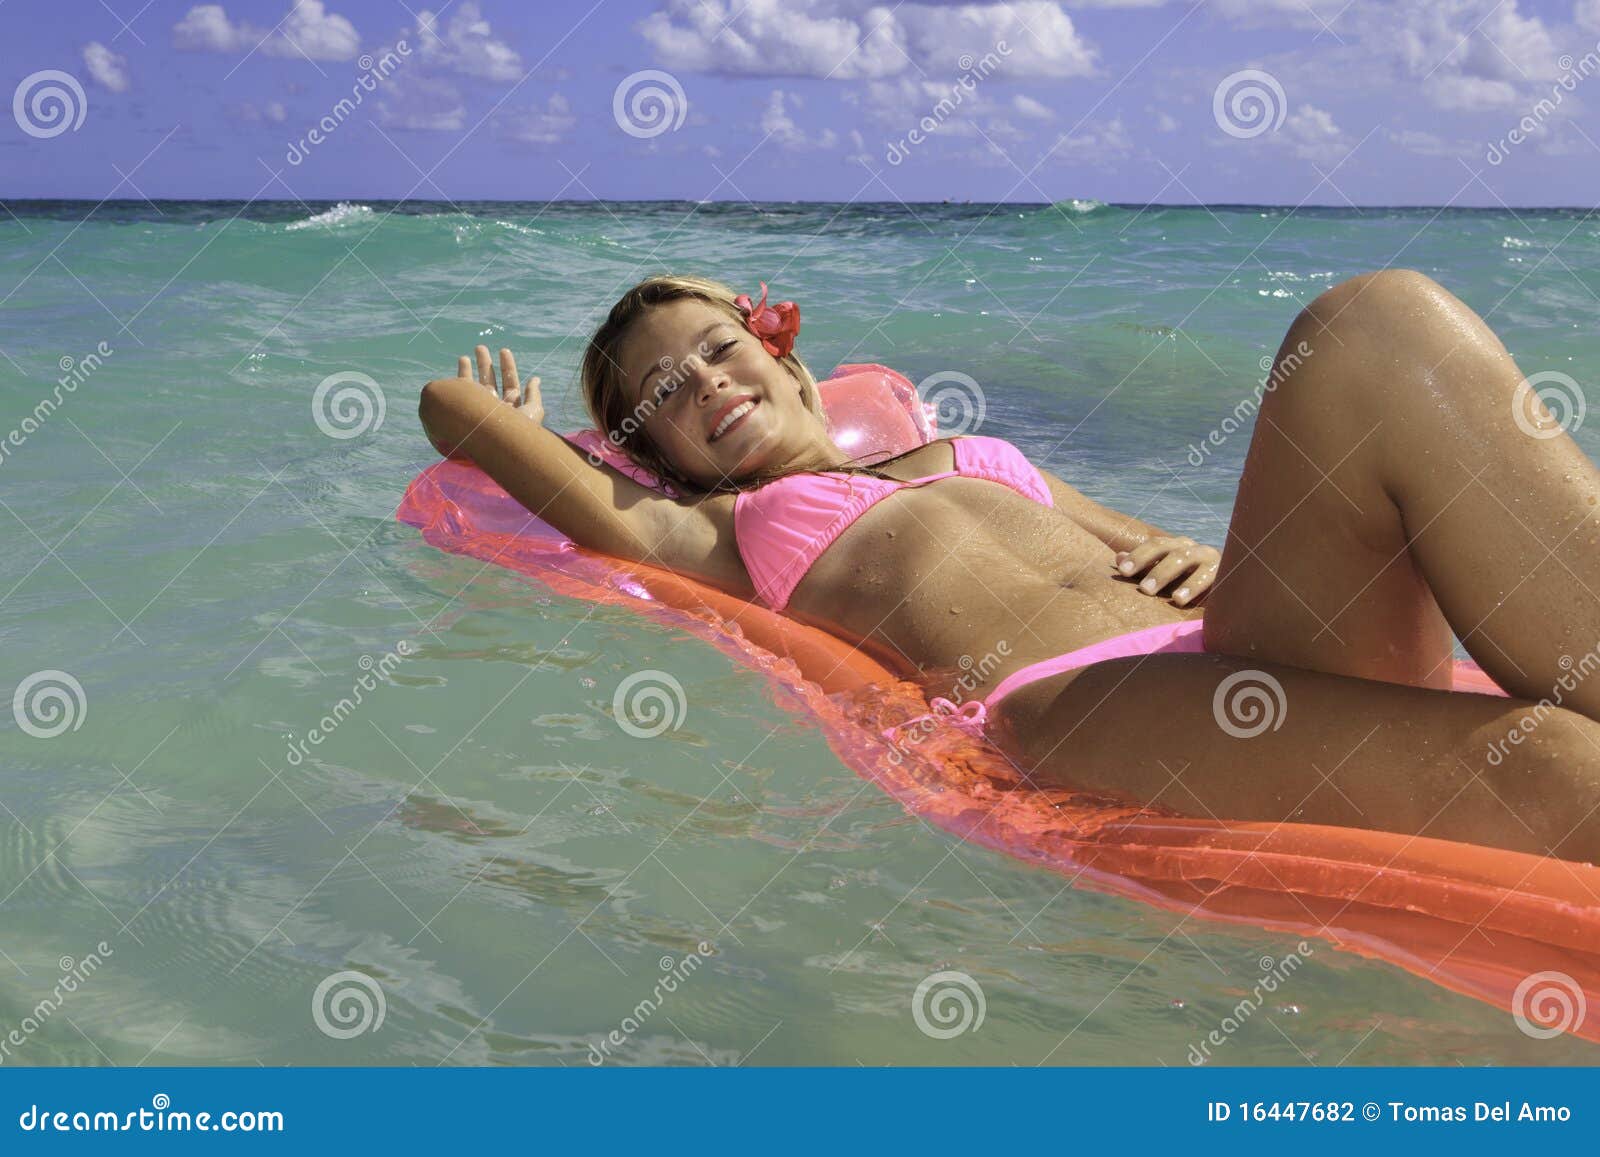 https://thumbs.dreamstime.com/z/teenage-girl-pink-bikini-floating-16447682.jpg